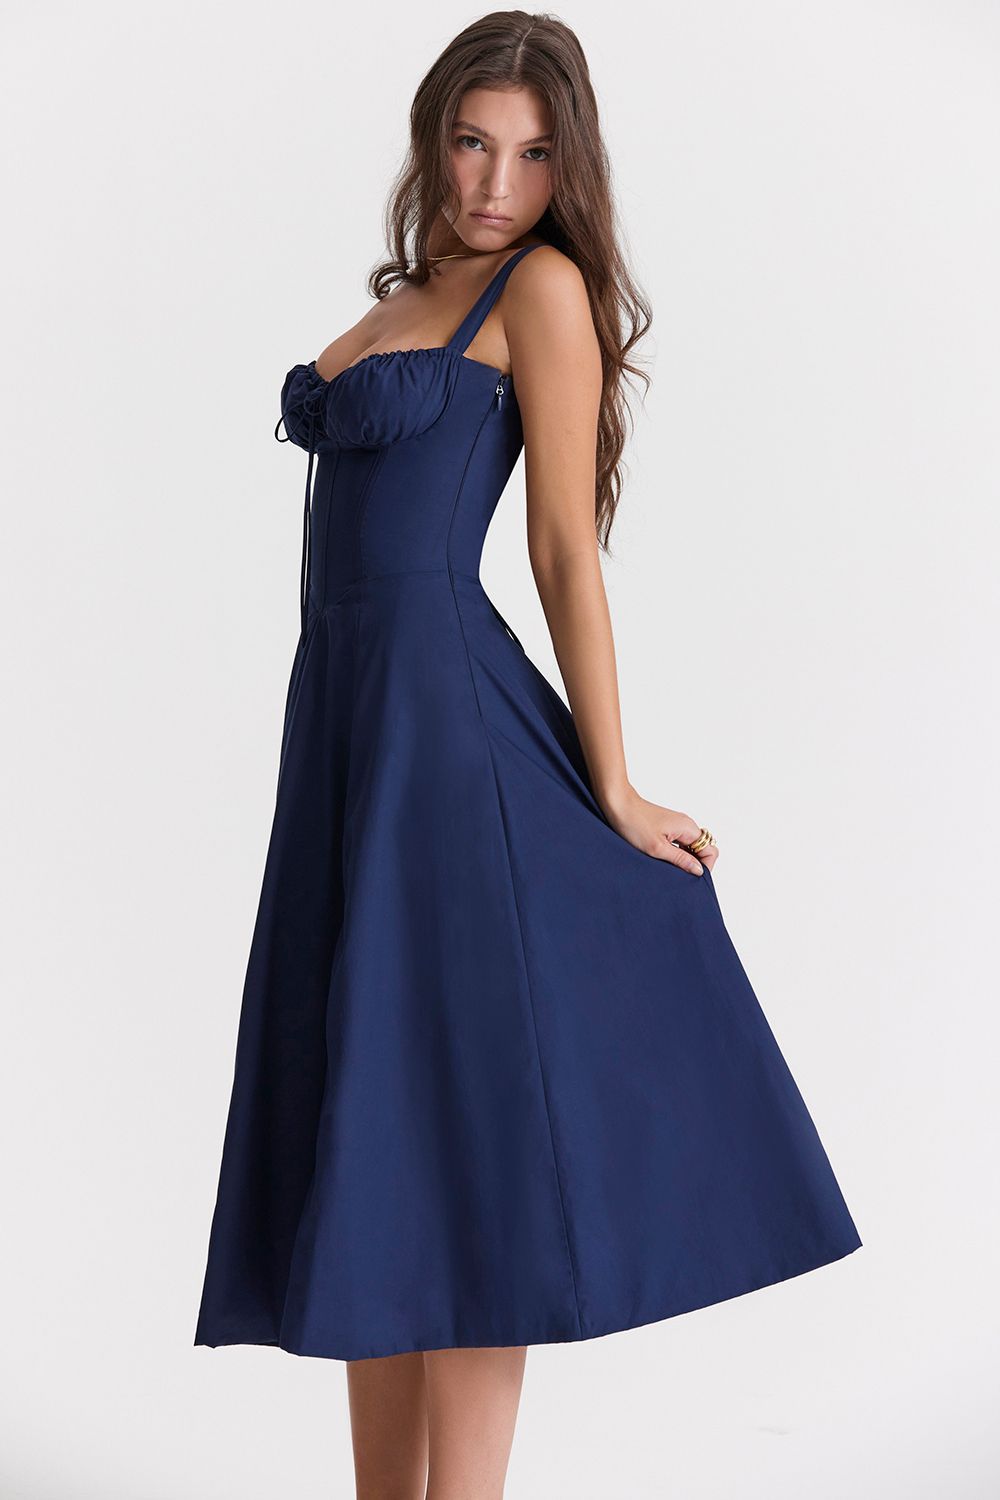 Vestido Midi Fenda Eloisa Azul - Modenna 9